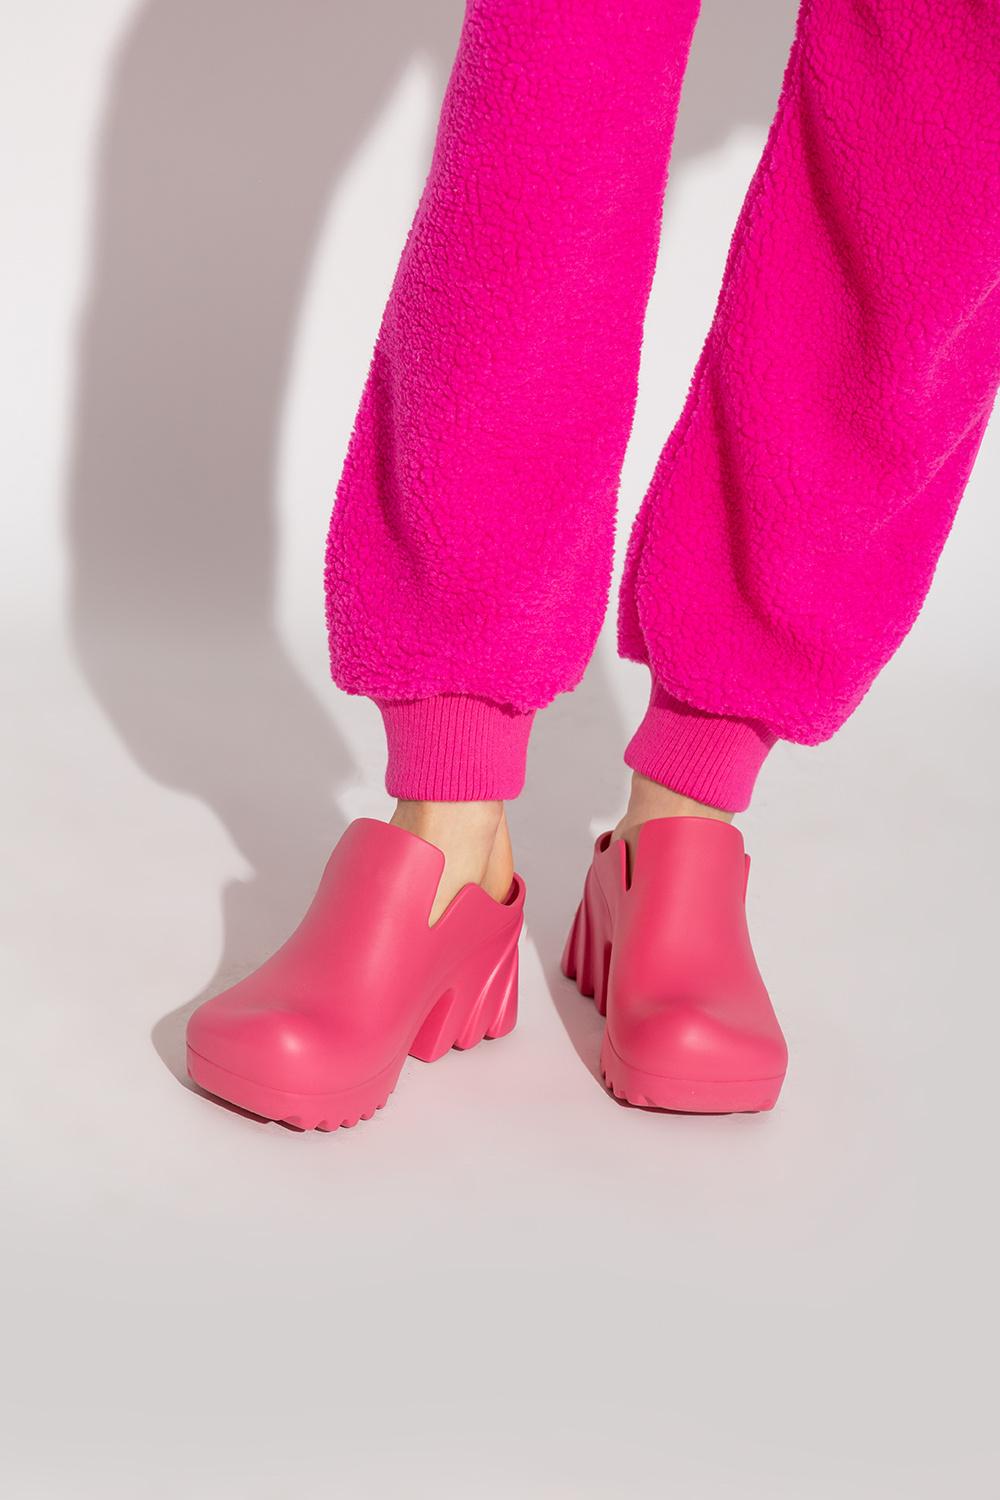 Bottega Veneta 'flash' Heeled Rubber Mules in Pink | Lyst